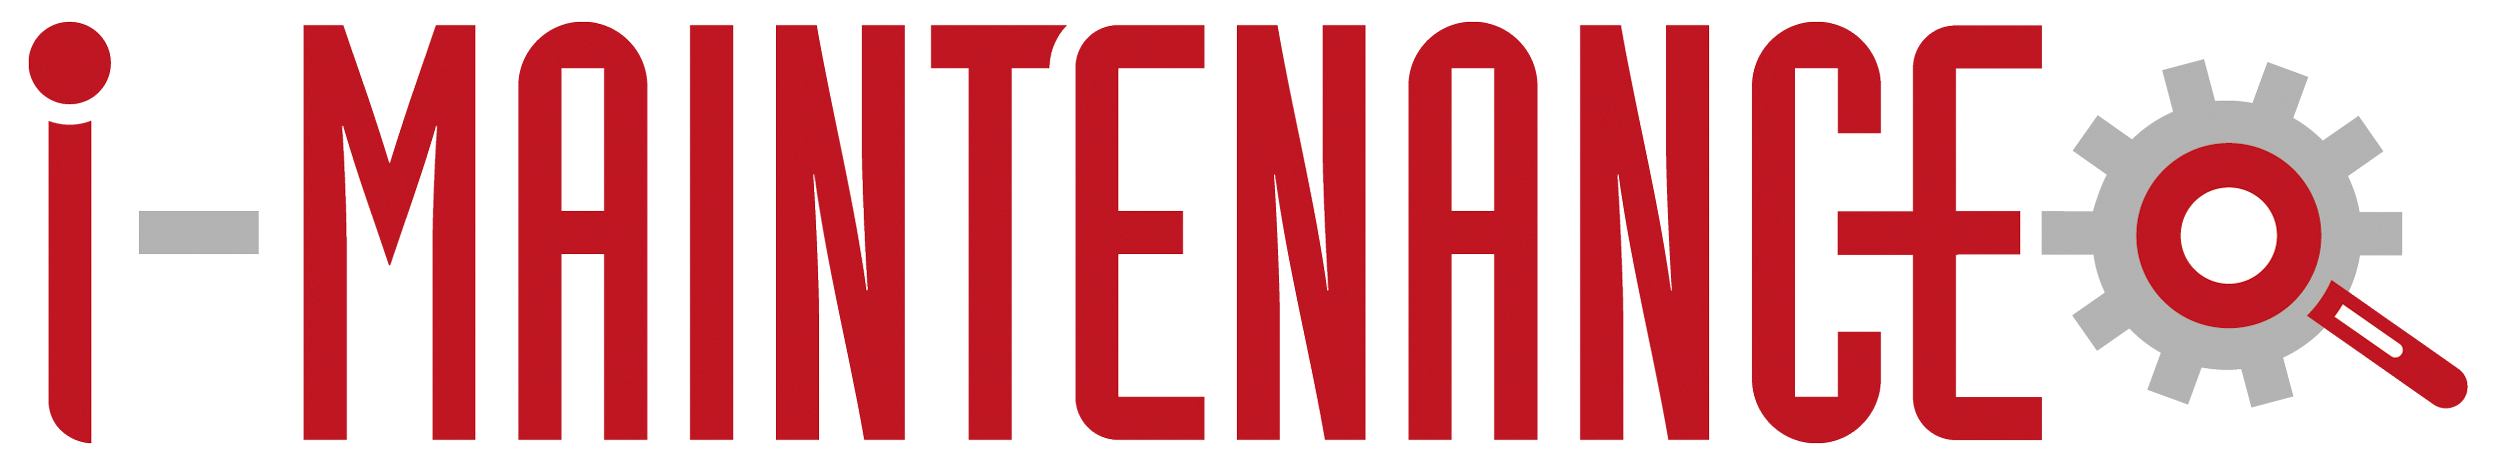 i-Maintenance Logo